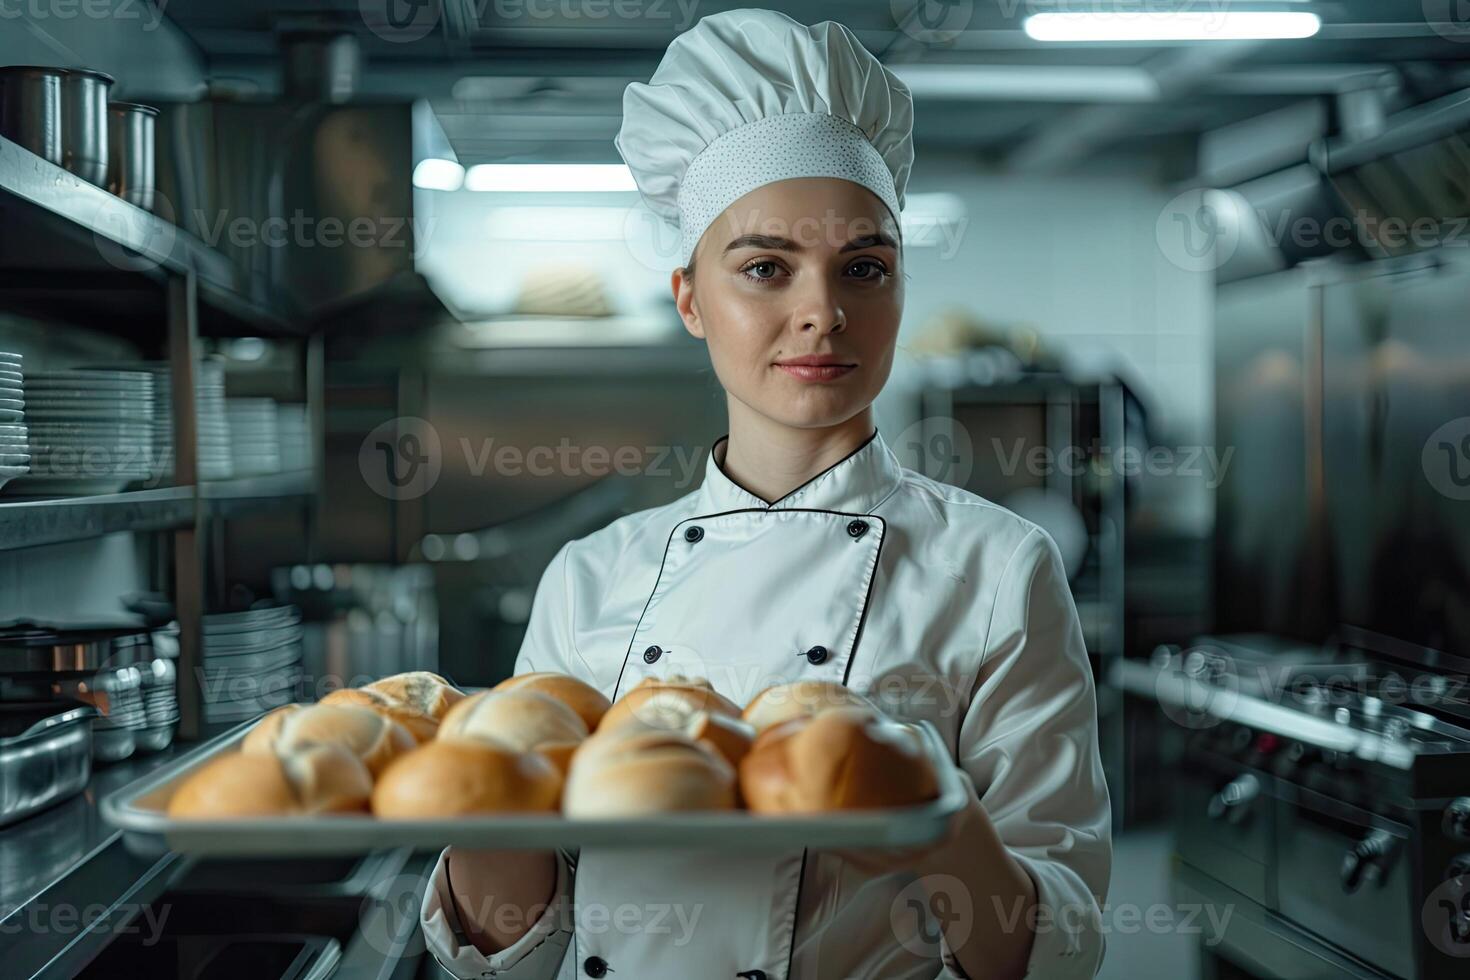 vrouw Holding dienblad van brood in keuken. foto